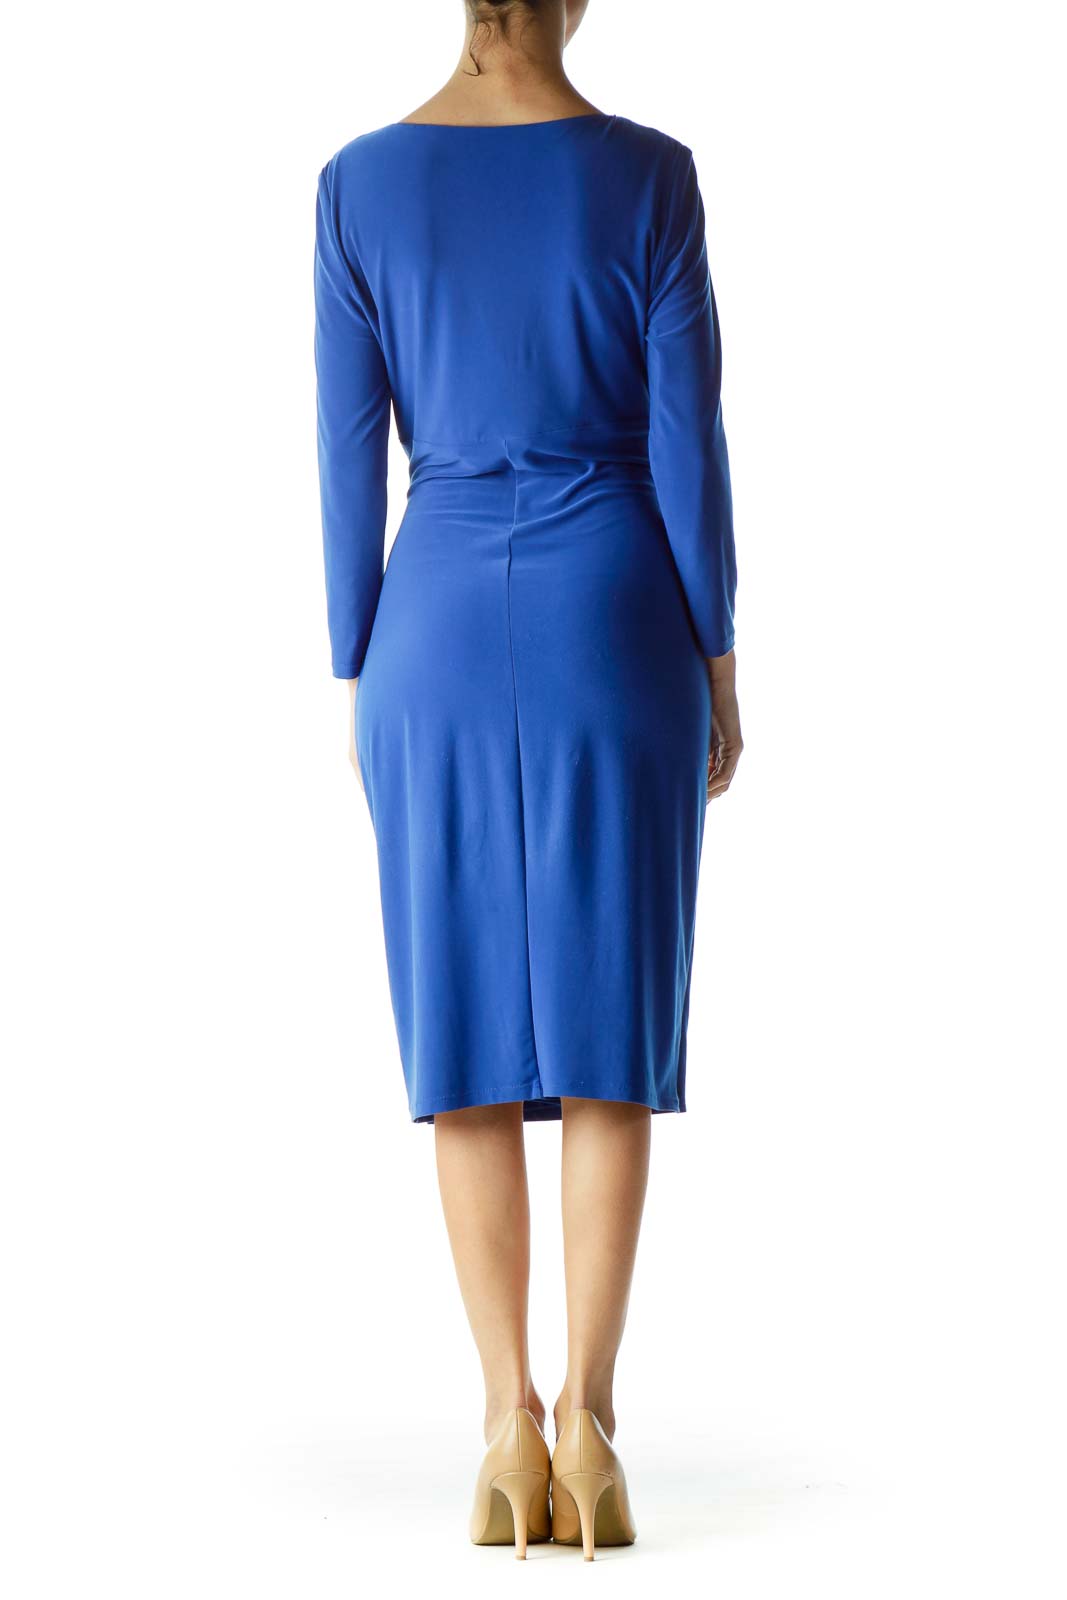 LAUREN Ralph Lauren Dress Ruched V-Neck Turquoise Blue 3/4 Sleeve